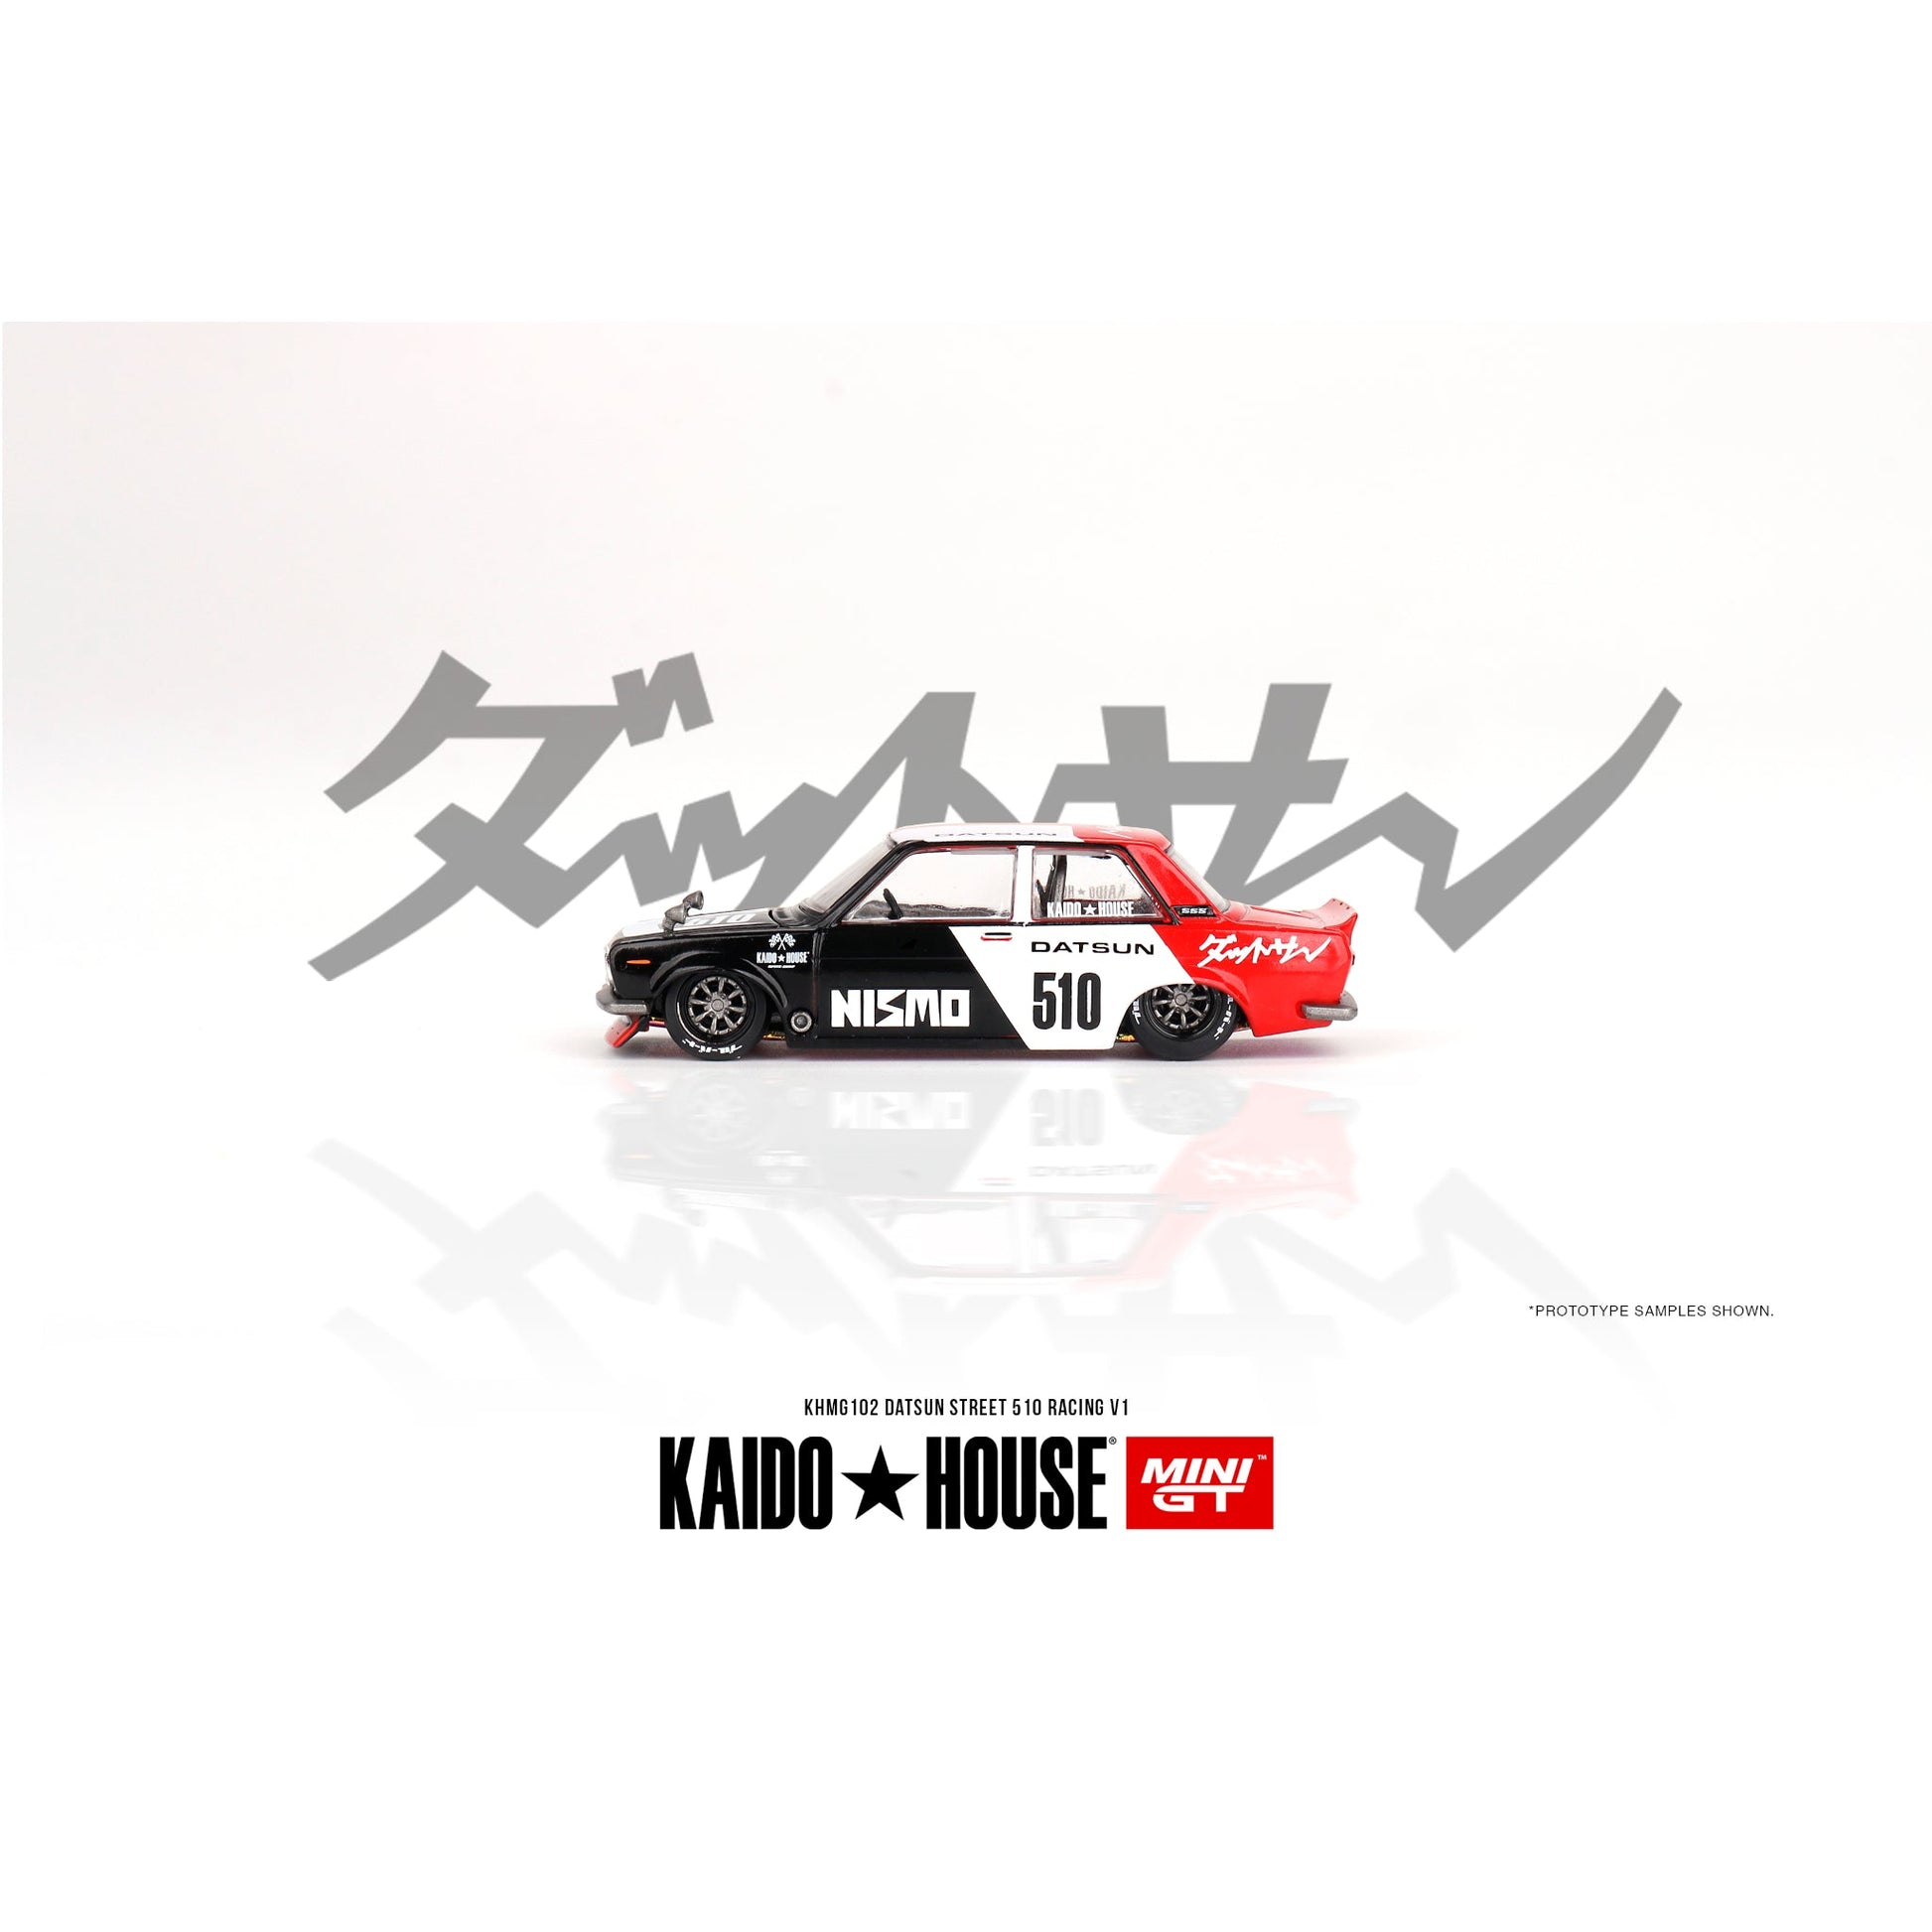 Kaido House Datsun Street 510 Racing V1 Mini GT 1/64 - KHMG102